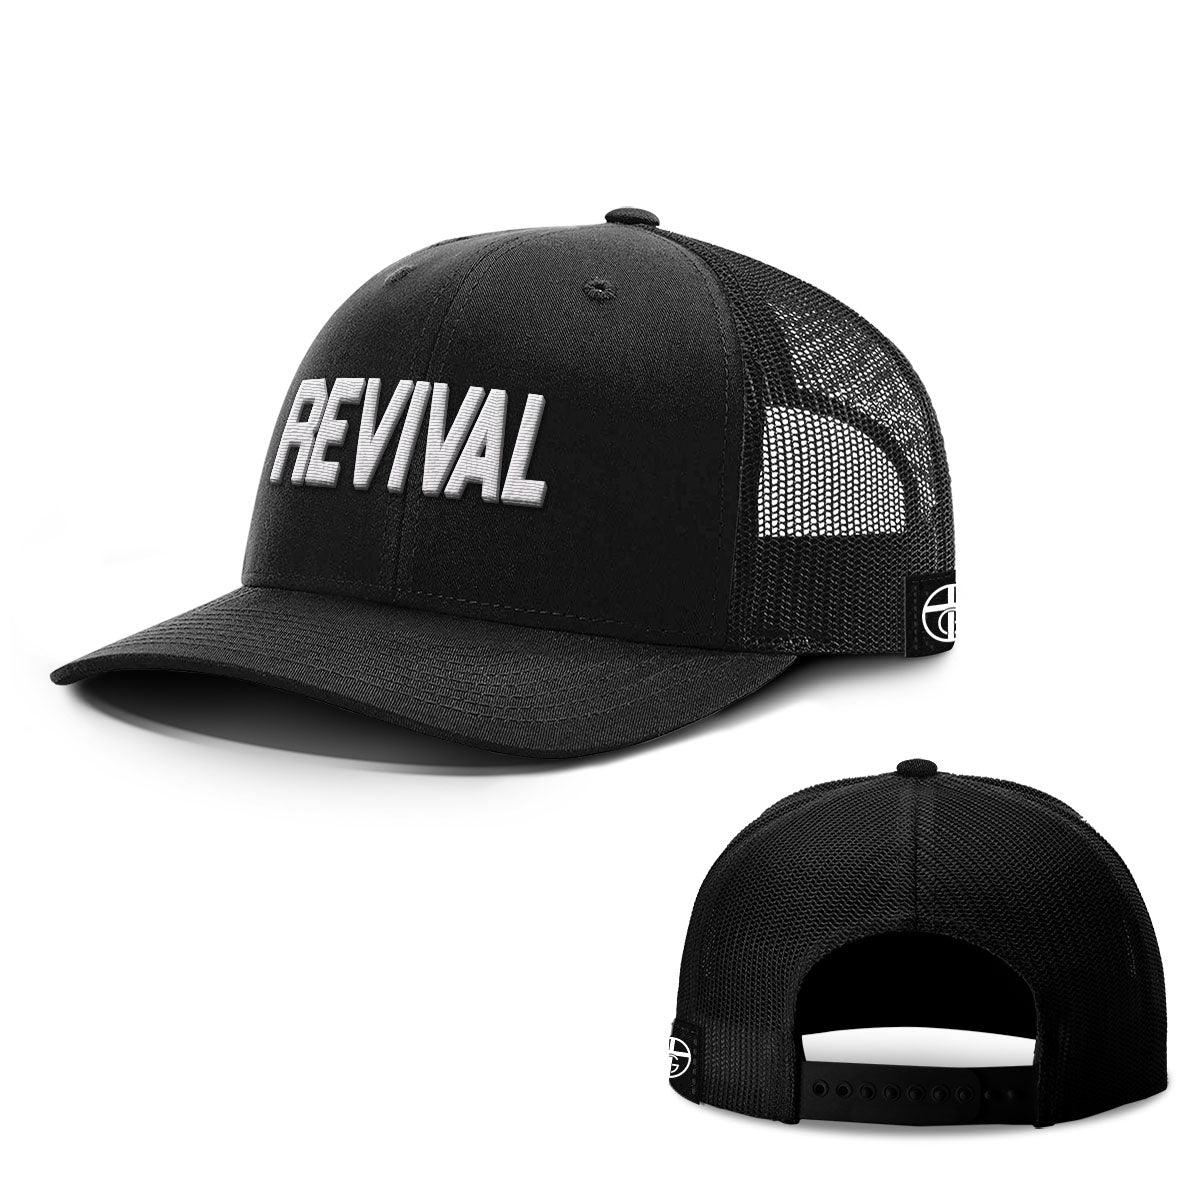 Revival Hats - Our True God